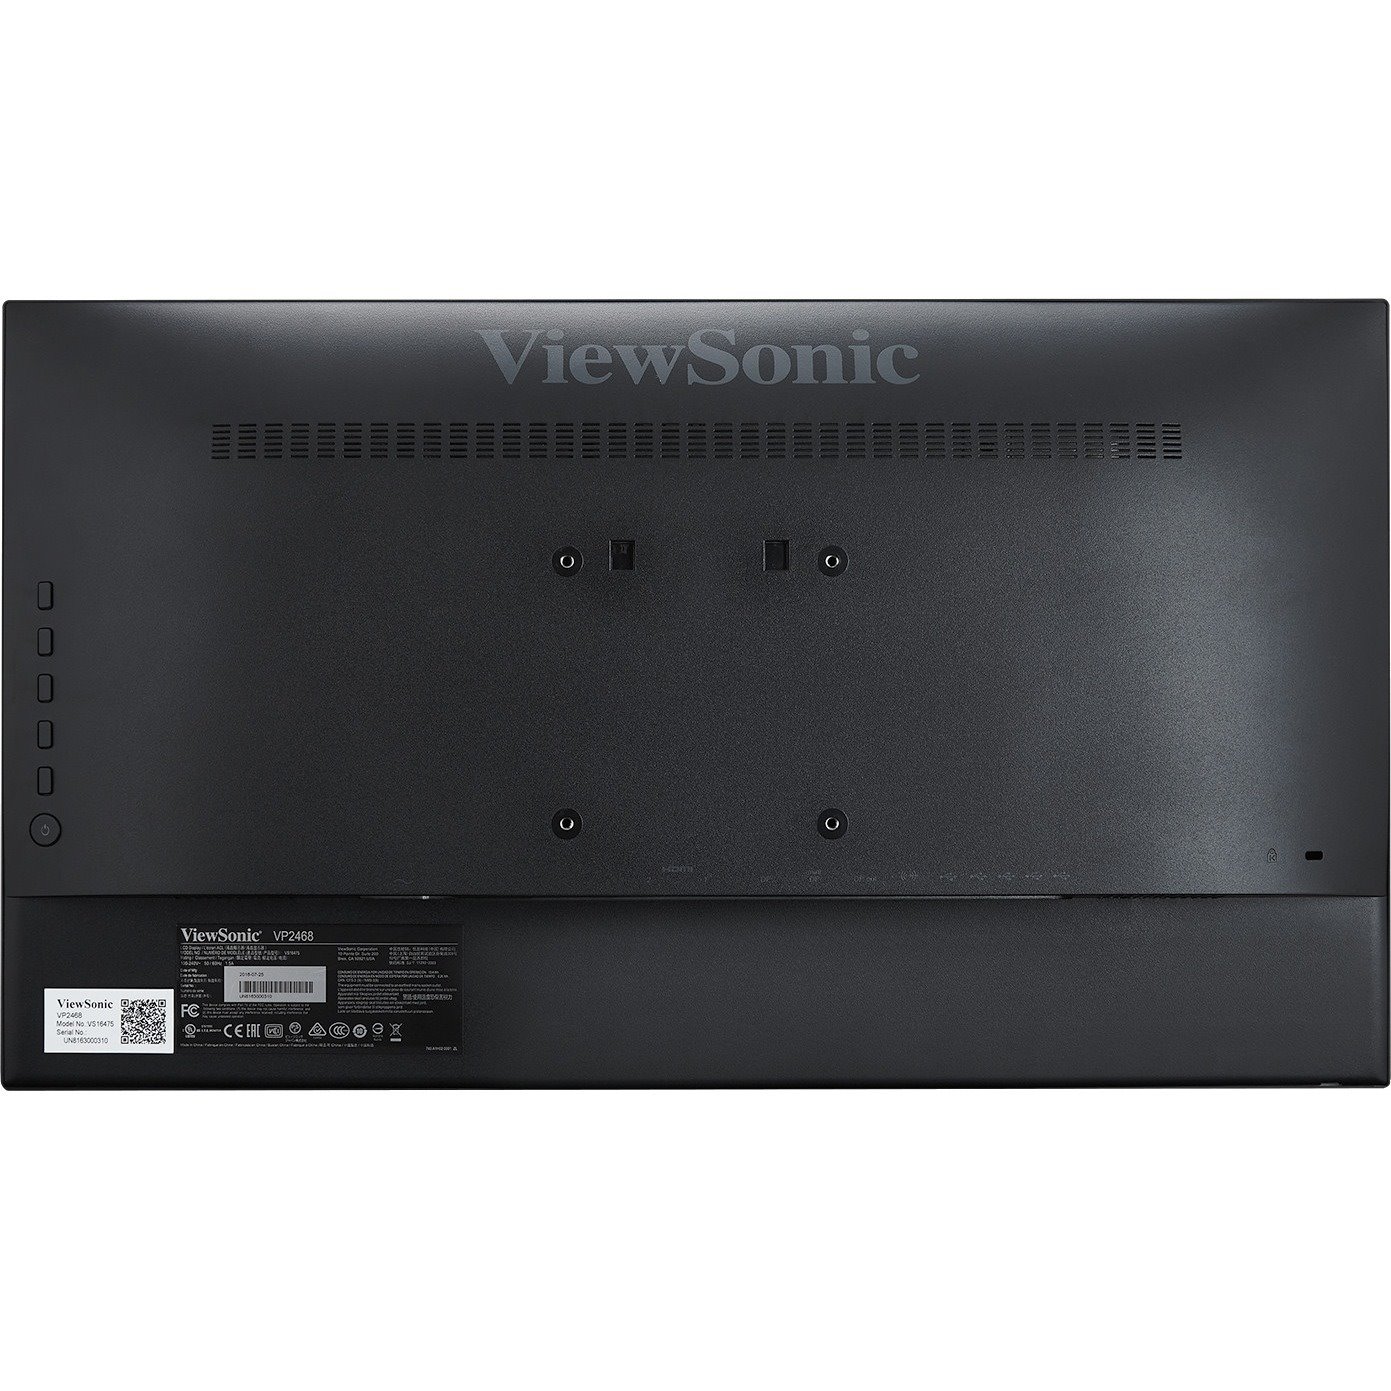 ViewSonic VP2468_H2 24-Inch Premium Dual Pack Head-Only IPS 1080p Monitors with ColorPro 100% sRGB Rec 709, 14-bit 3D LUT, Eye Care, HDMI, USB, DP Daisy Chain, VESA